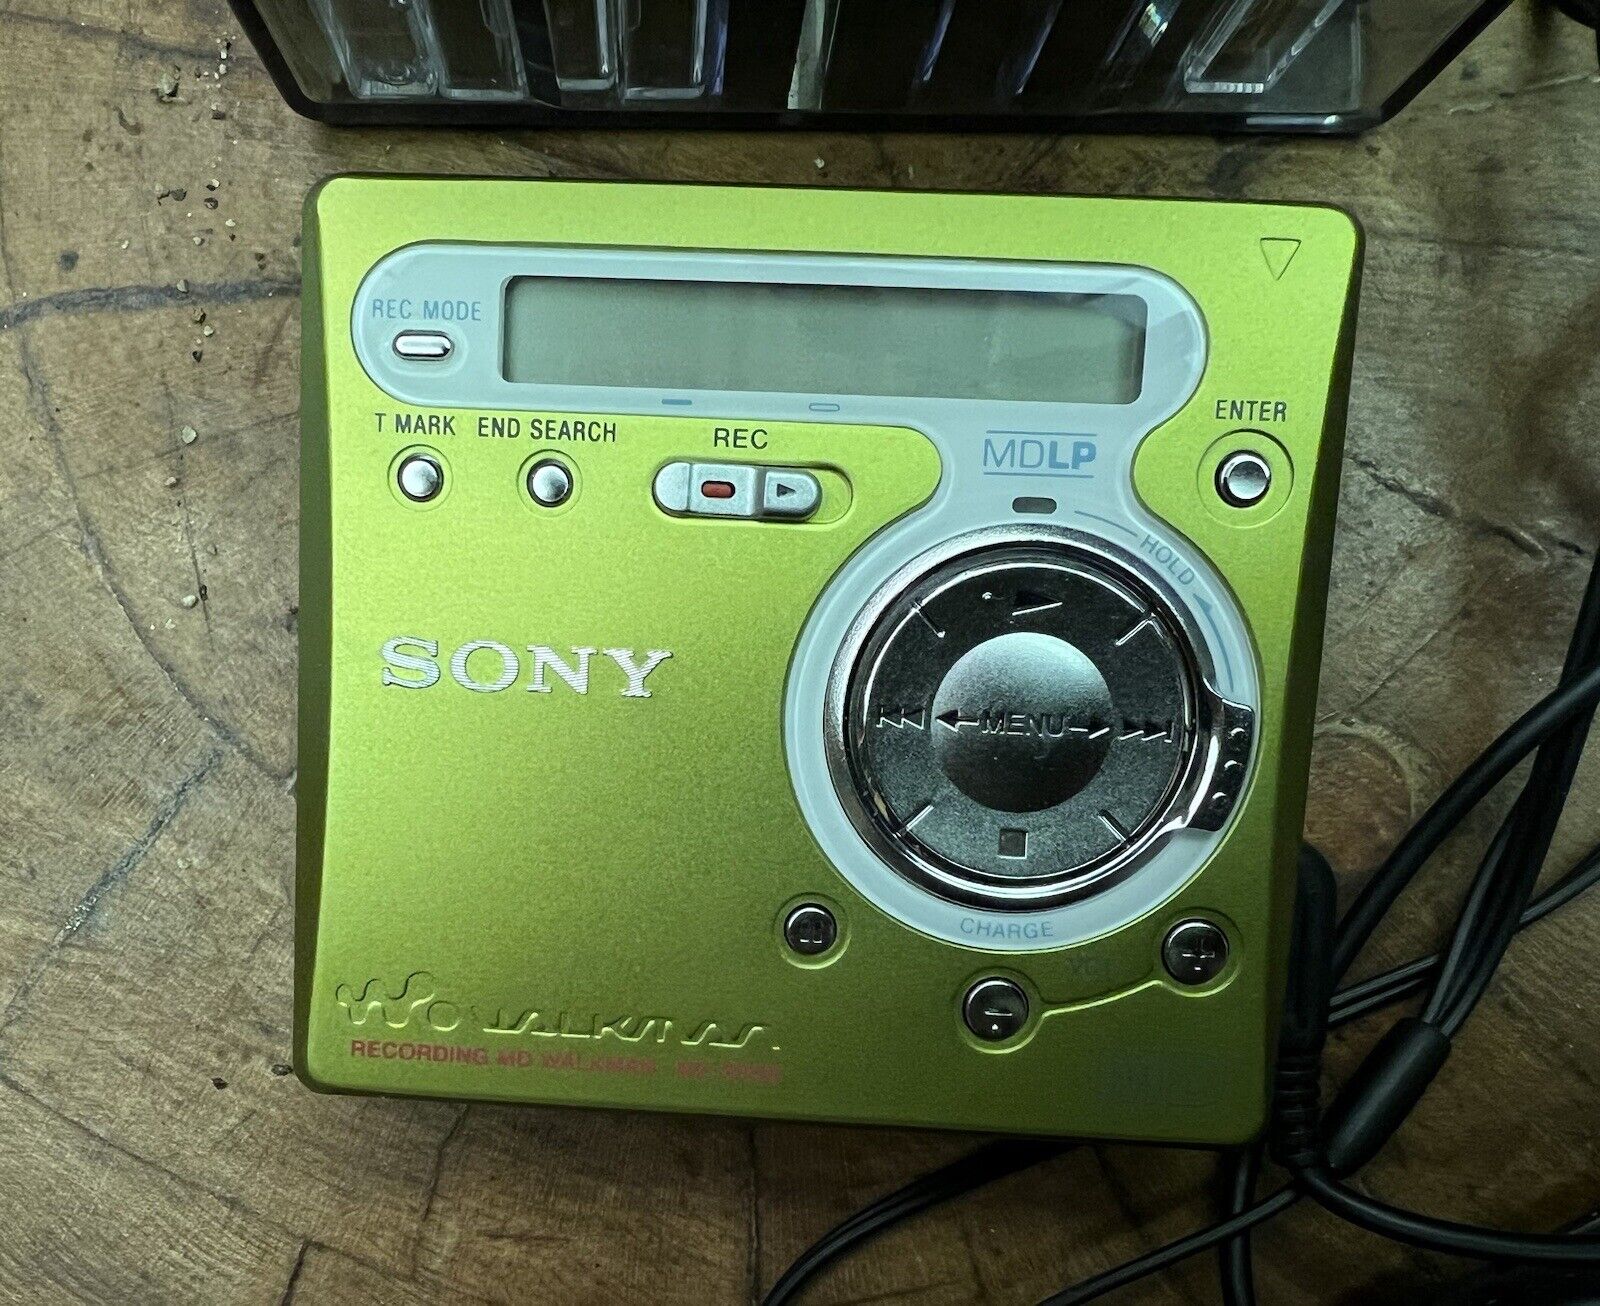 Sony Mz-r700 Md Recording Minidisc Walkman. Mint Condition. With 30 Discs